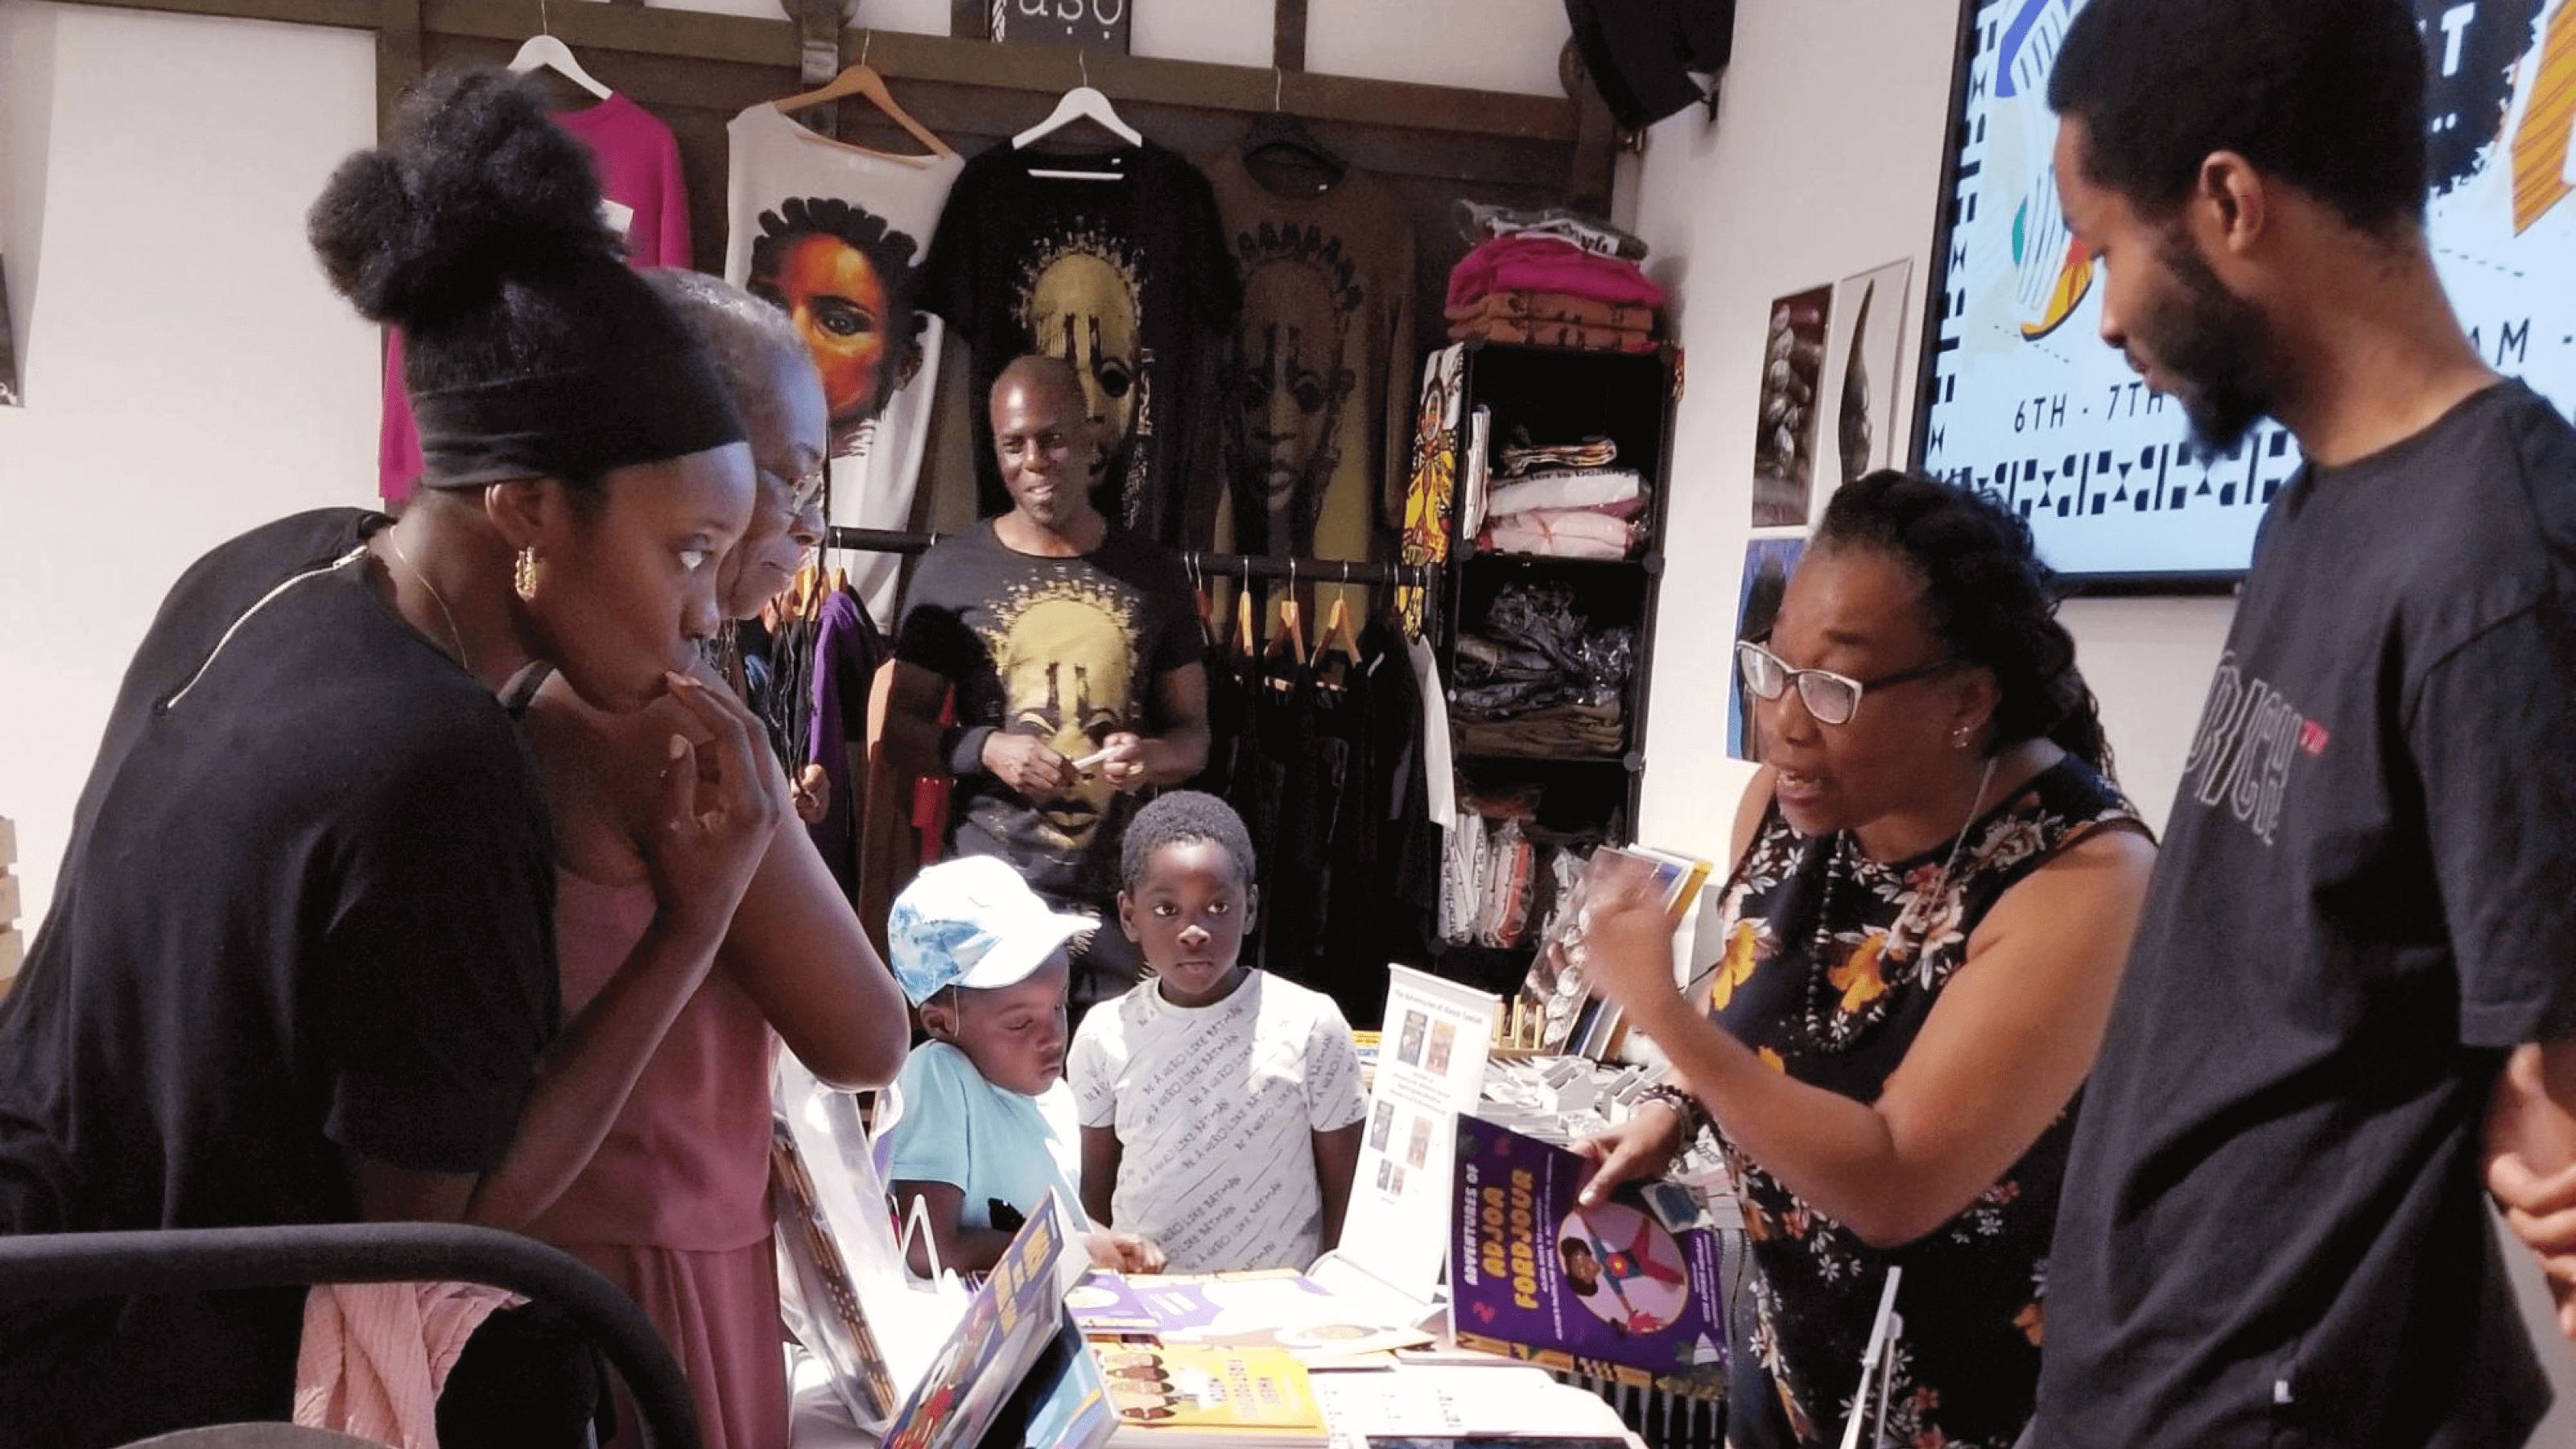 Customers talk to vendor at a craft fair